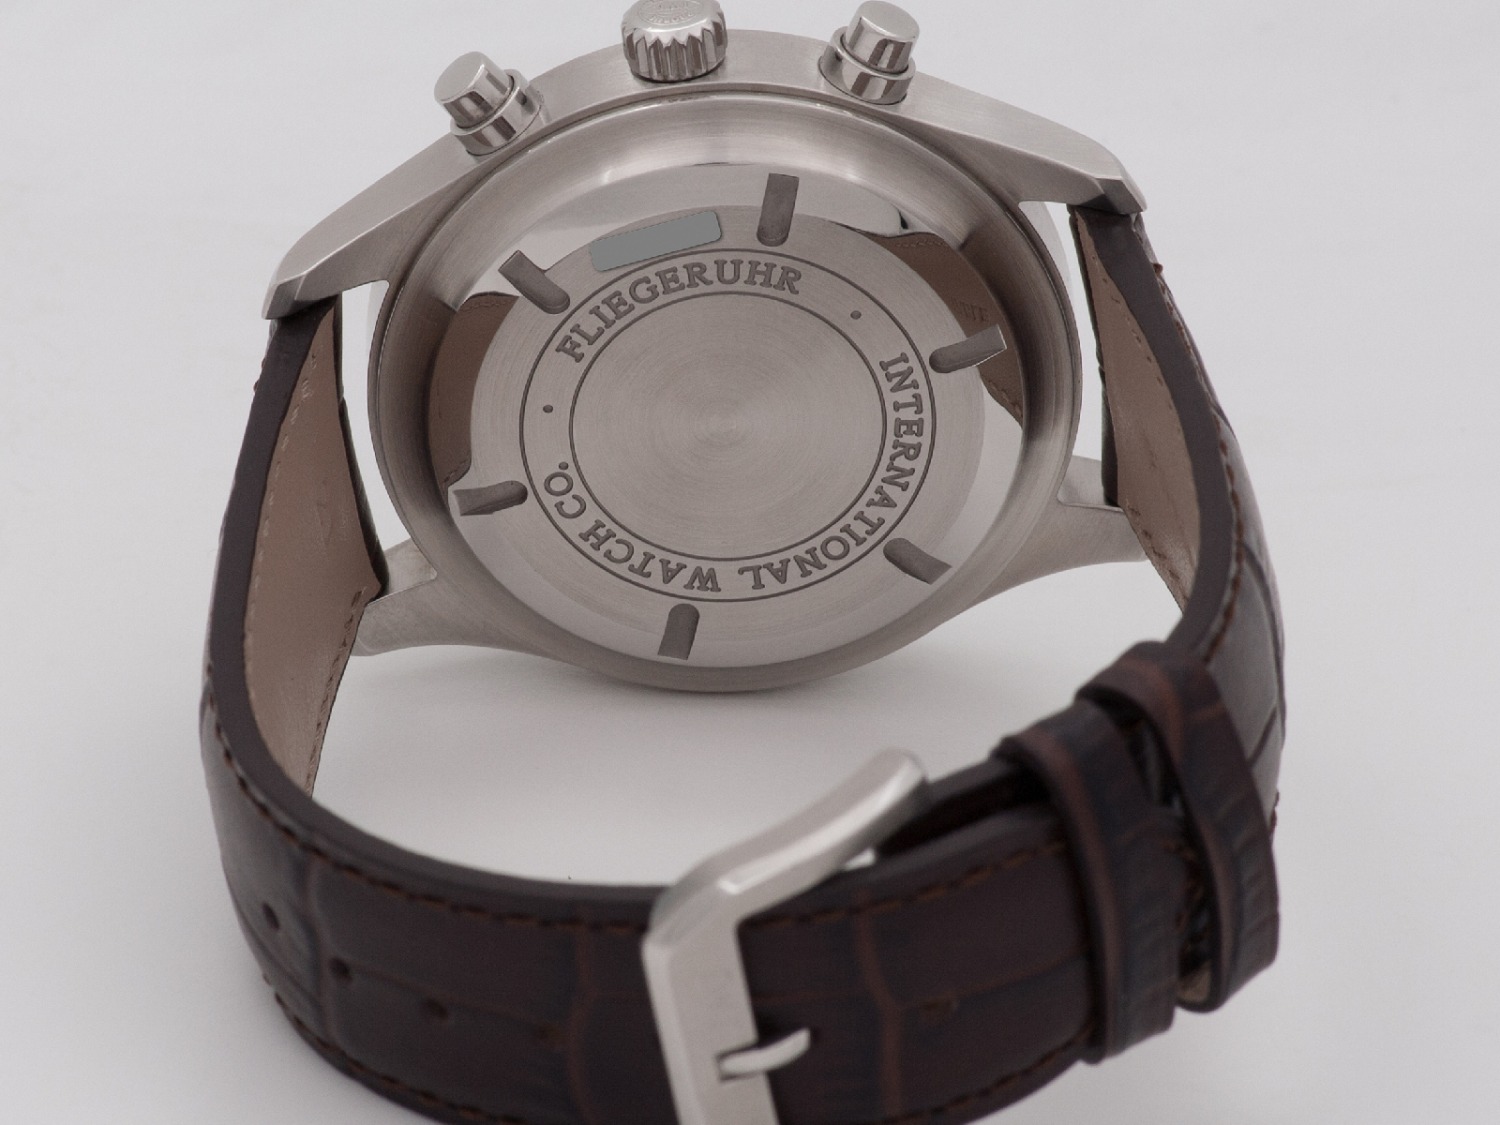 IWC Pilot Chronograph Day-Date watch, silver